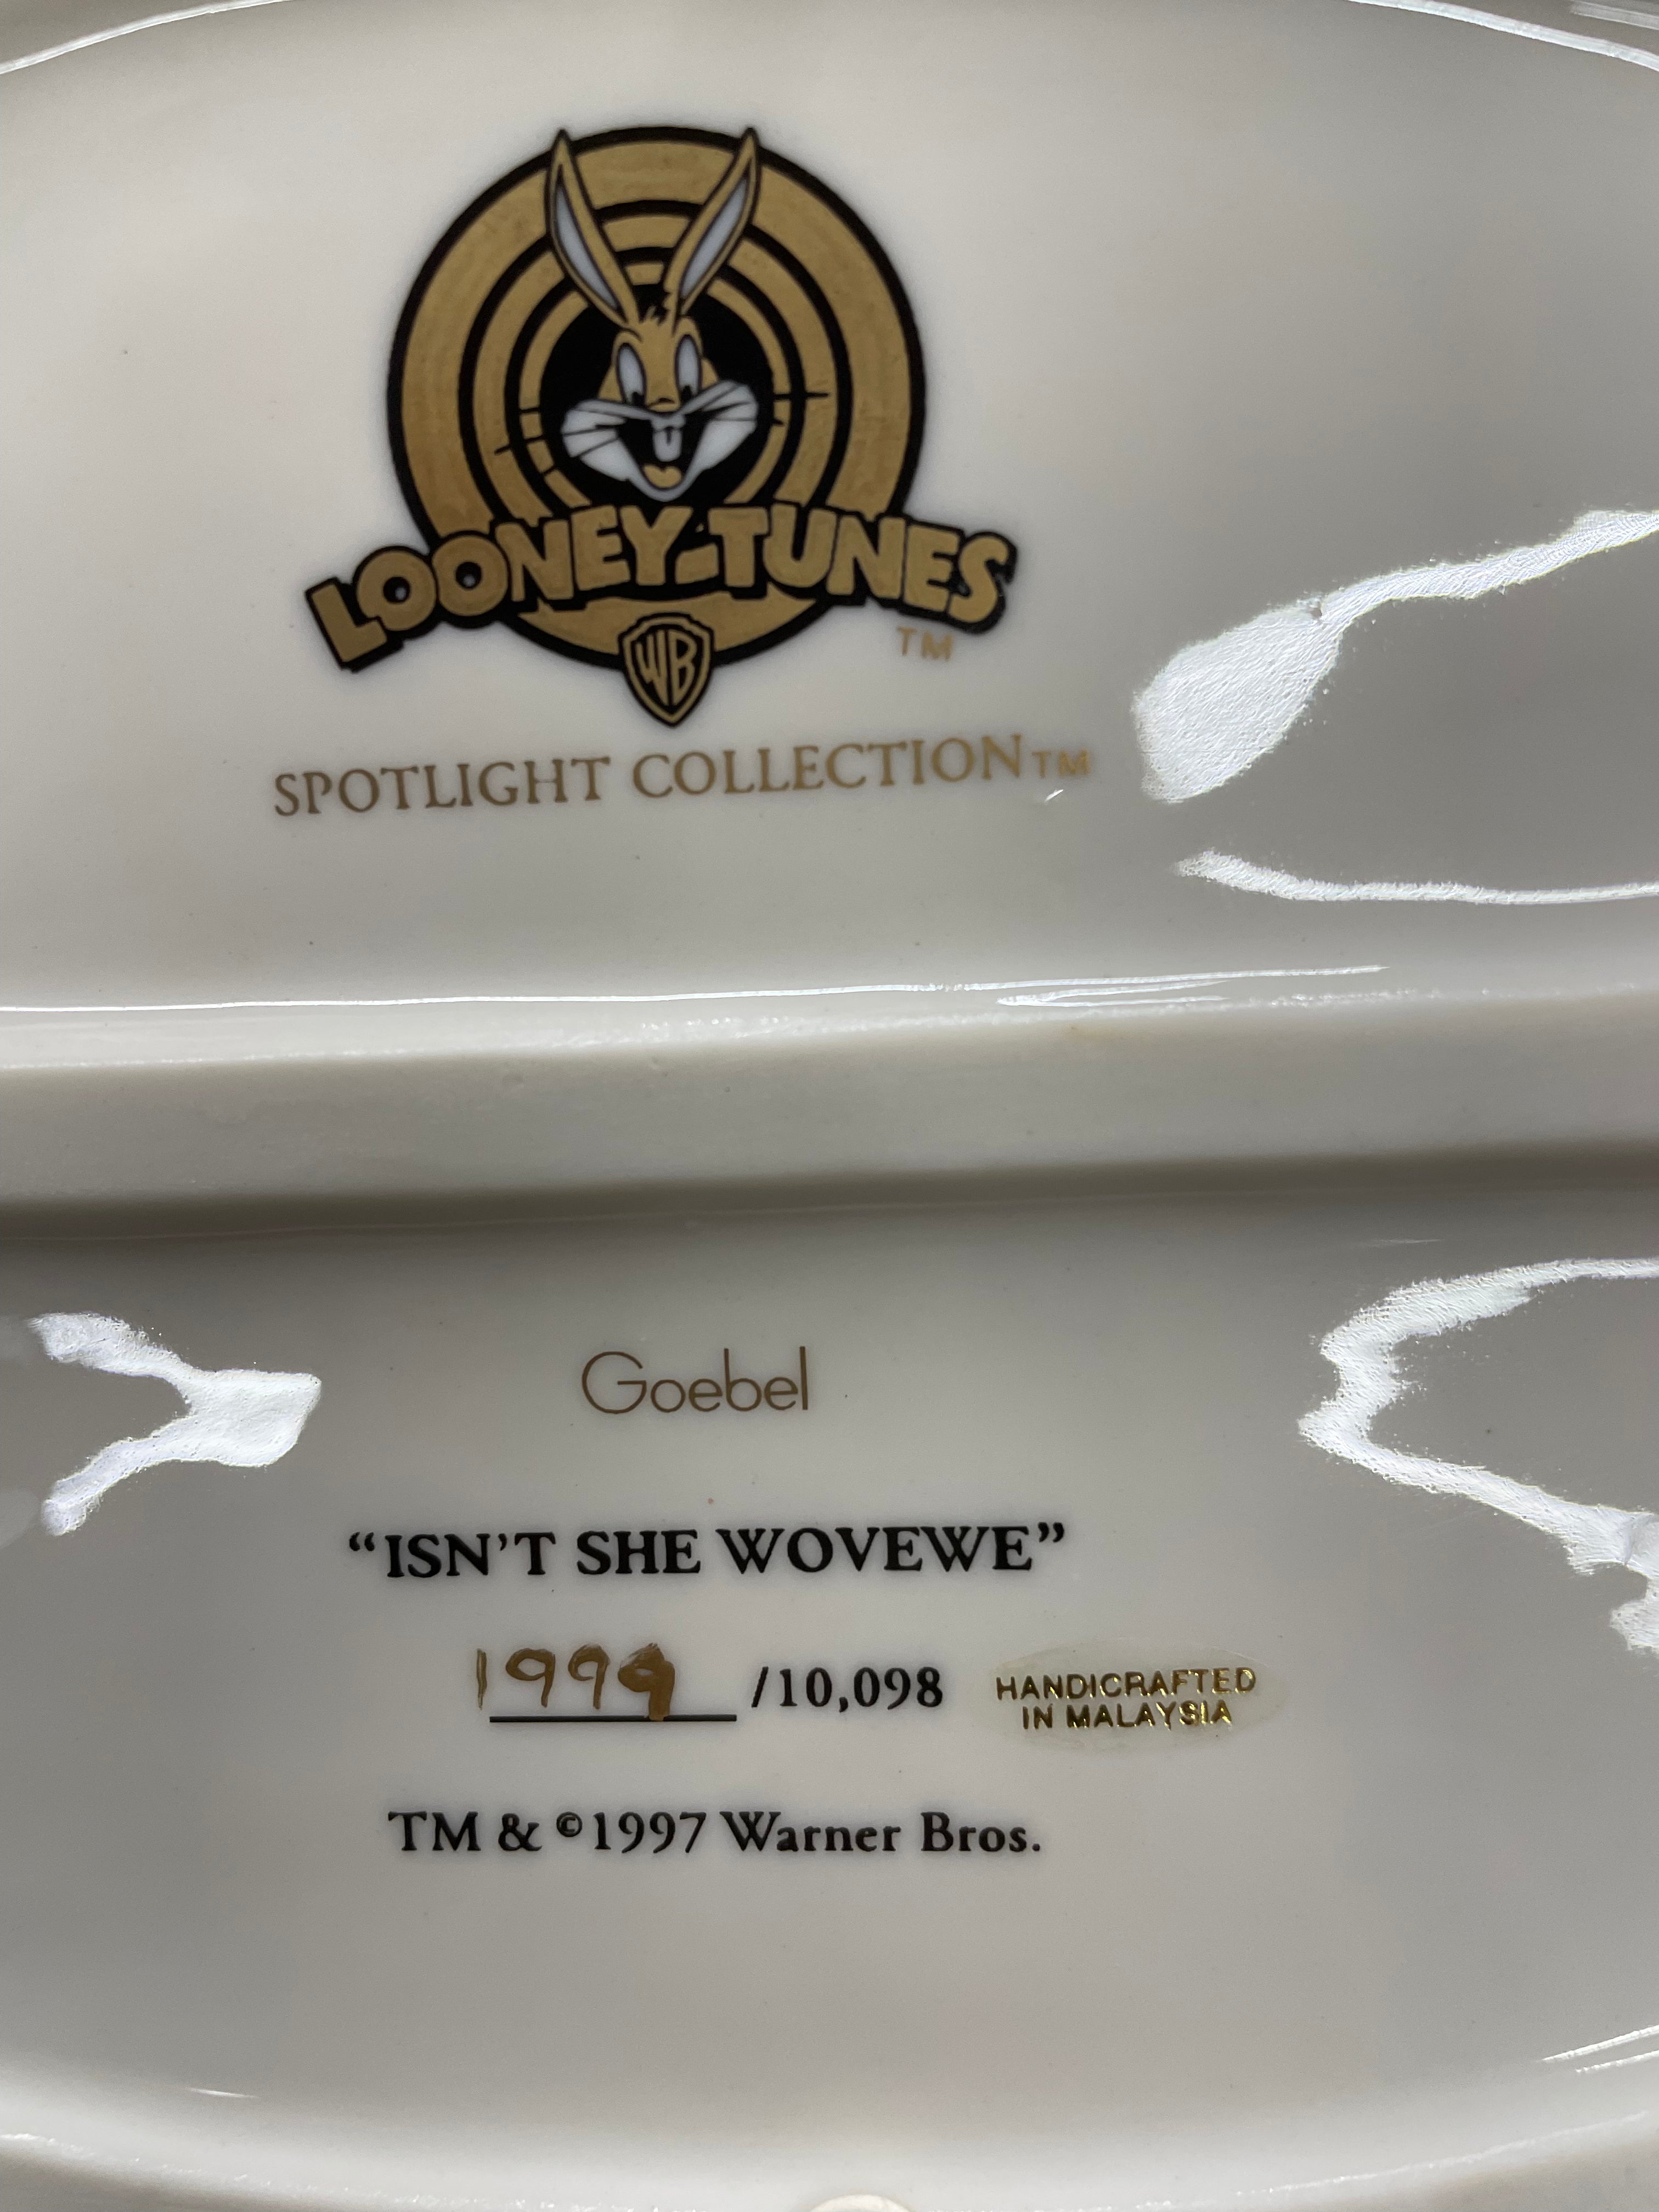 "Isn't She Wovewe" Looney Tunes Spotlight Collection